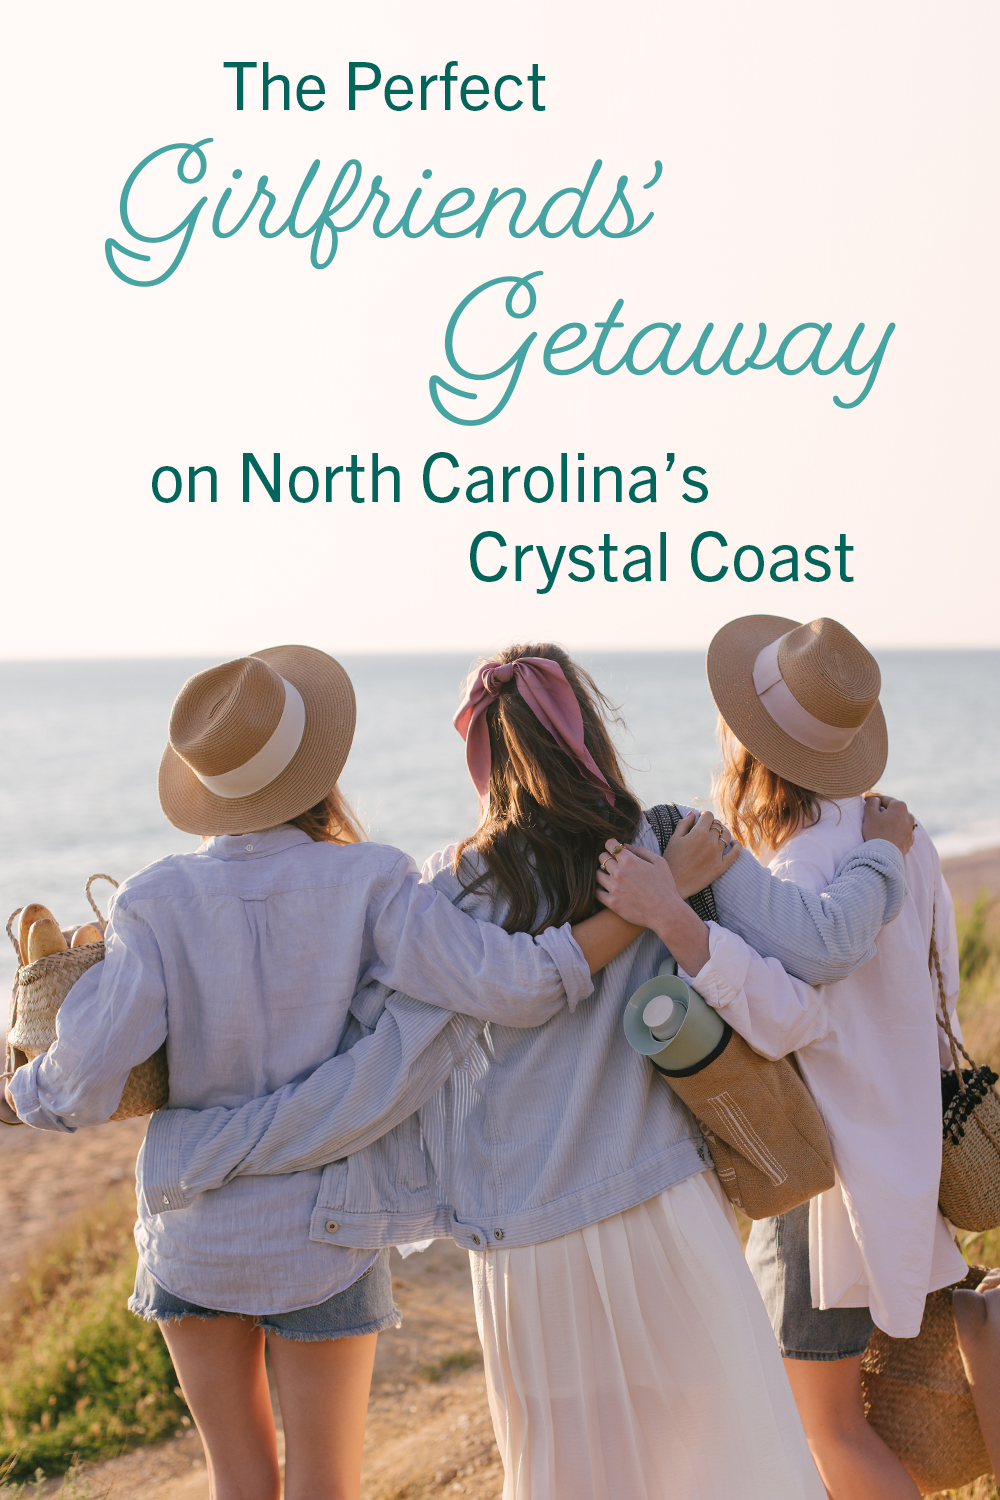 The Perfect Girlfriends' Getaway on North Carolina's Crystal Coast